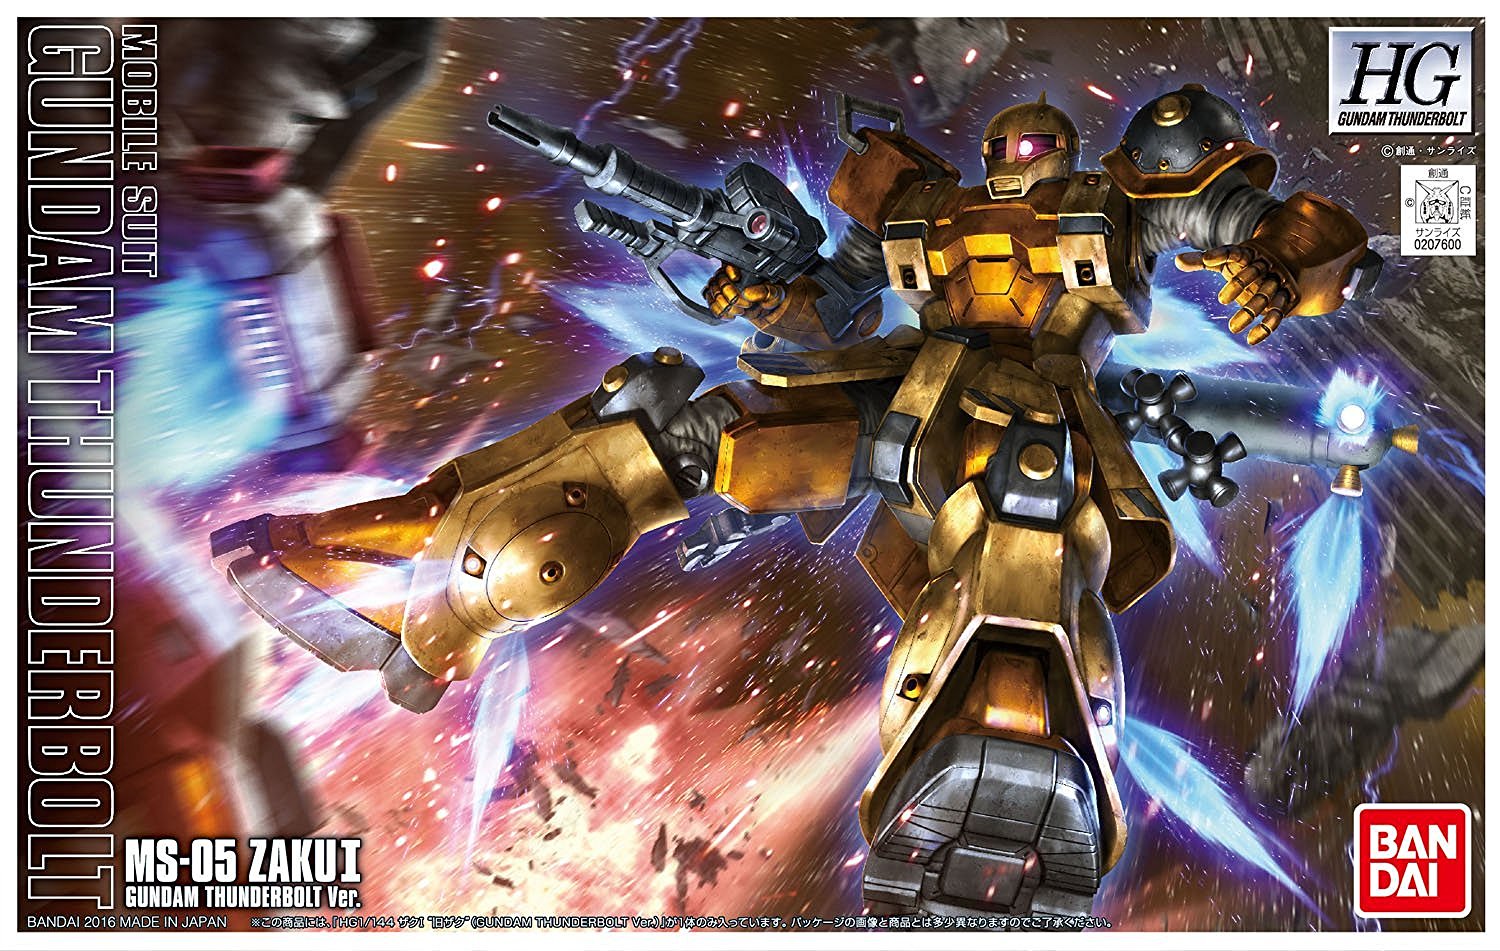 Gundam High Grade Thunderbolt: MS-05 Zaku I, Gundam Thunderbolt Ver. (Anime Color) 